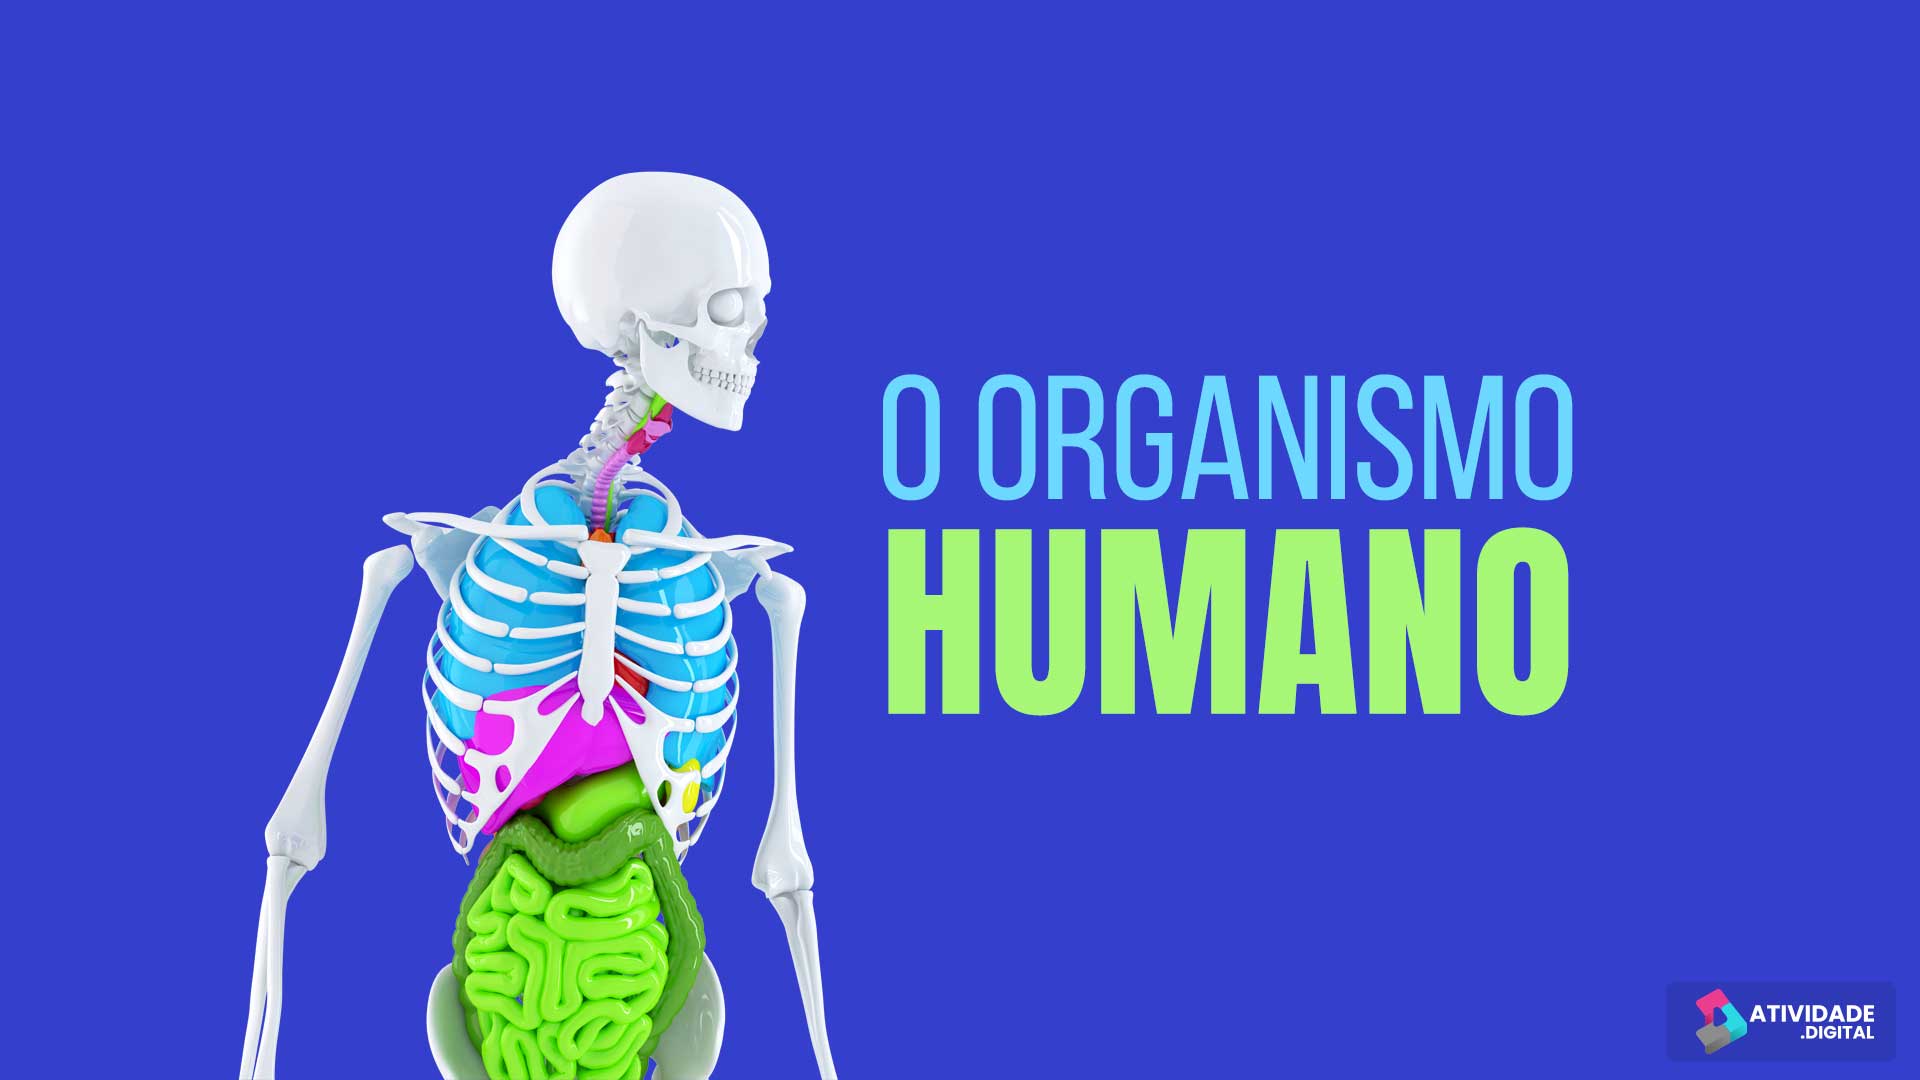 O organismo humano